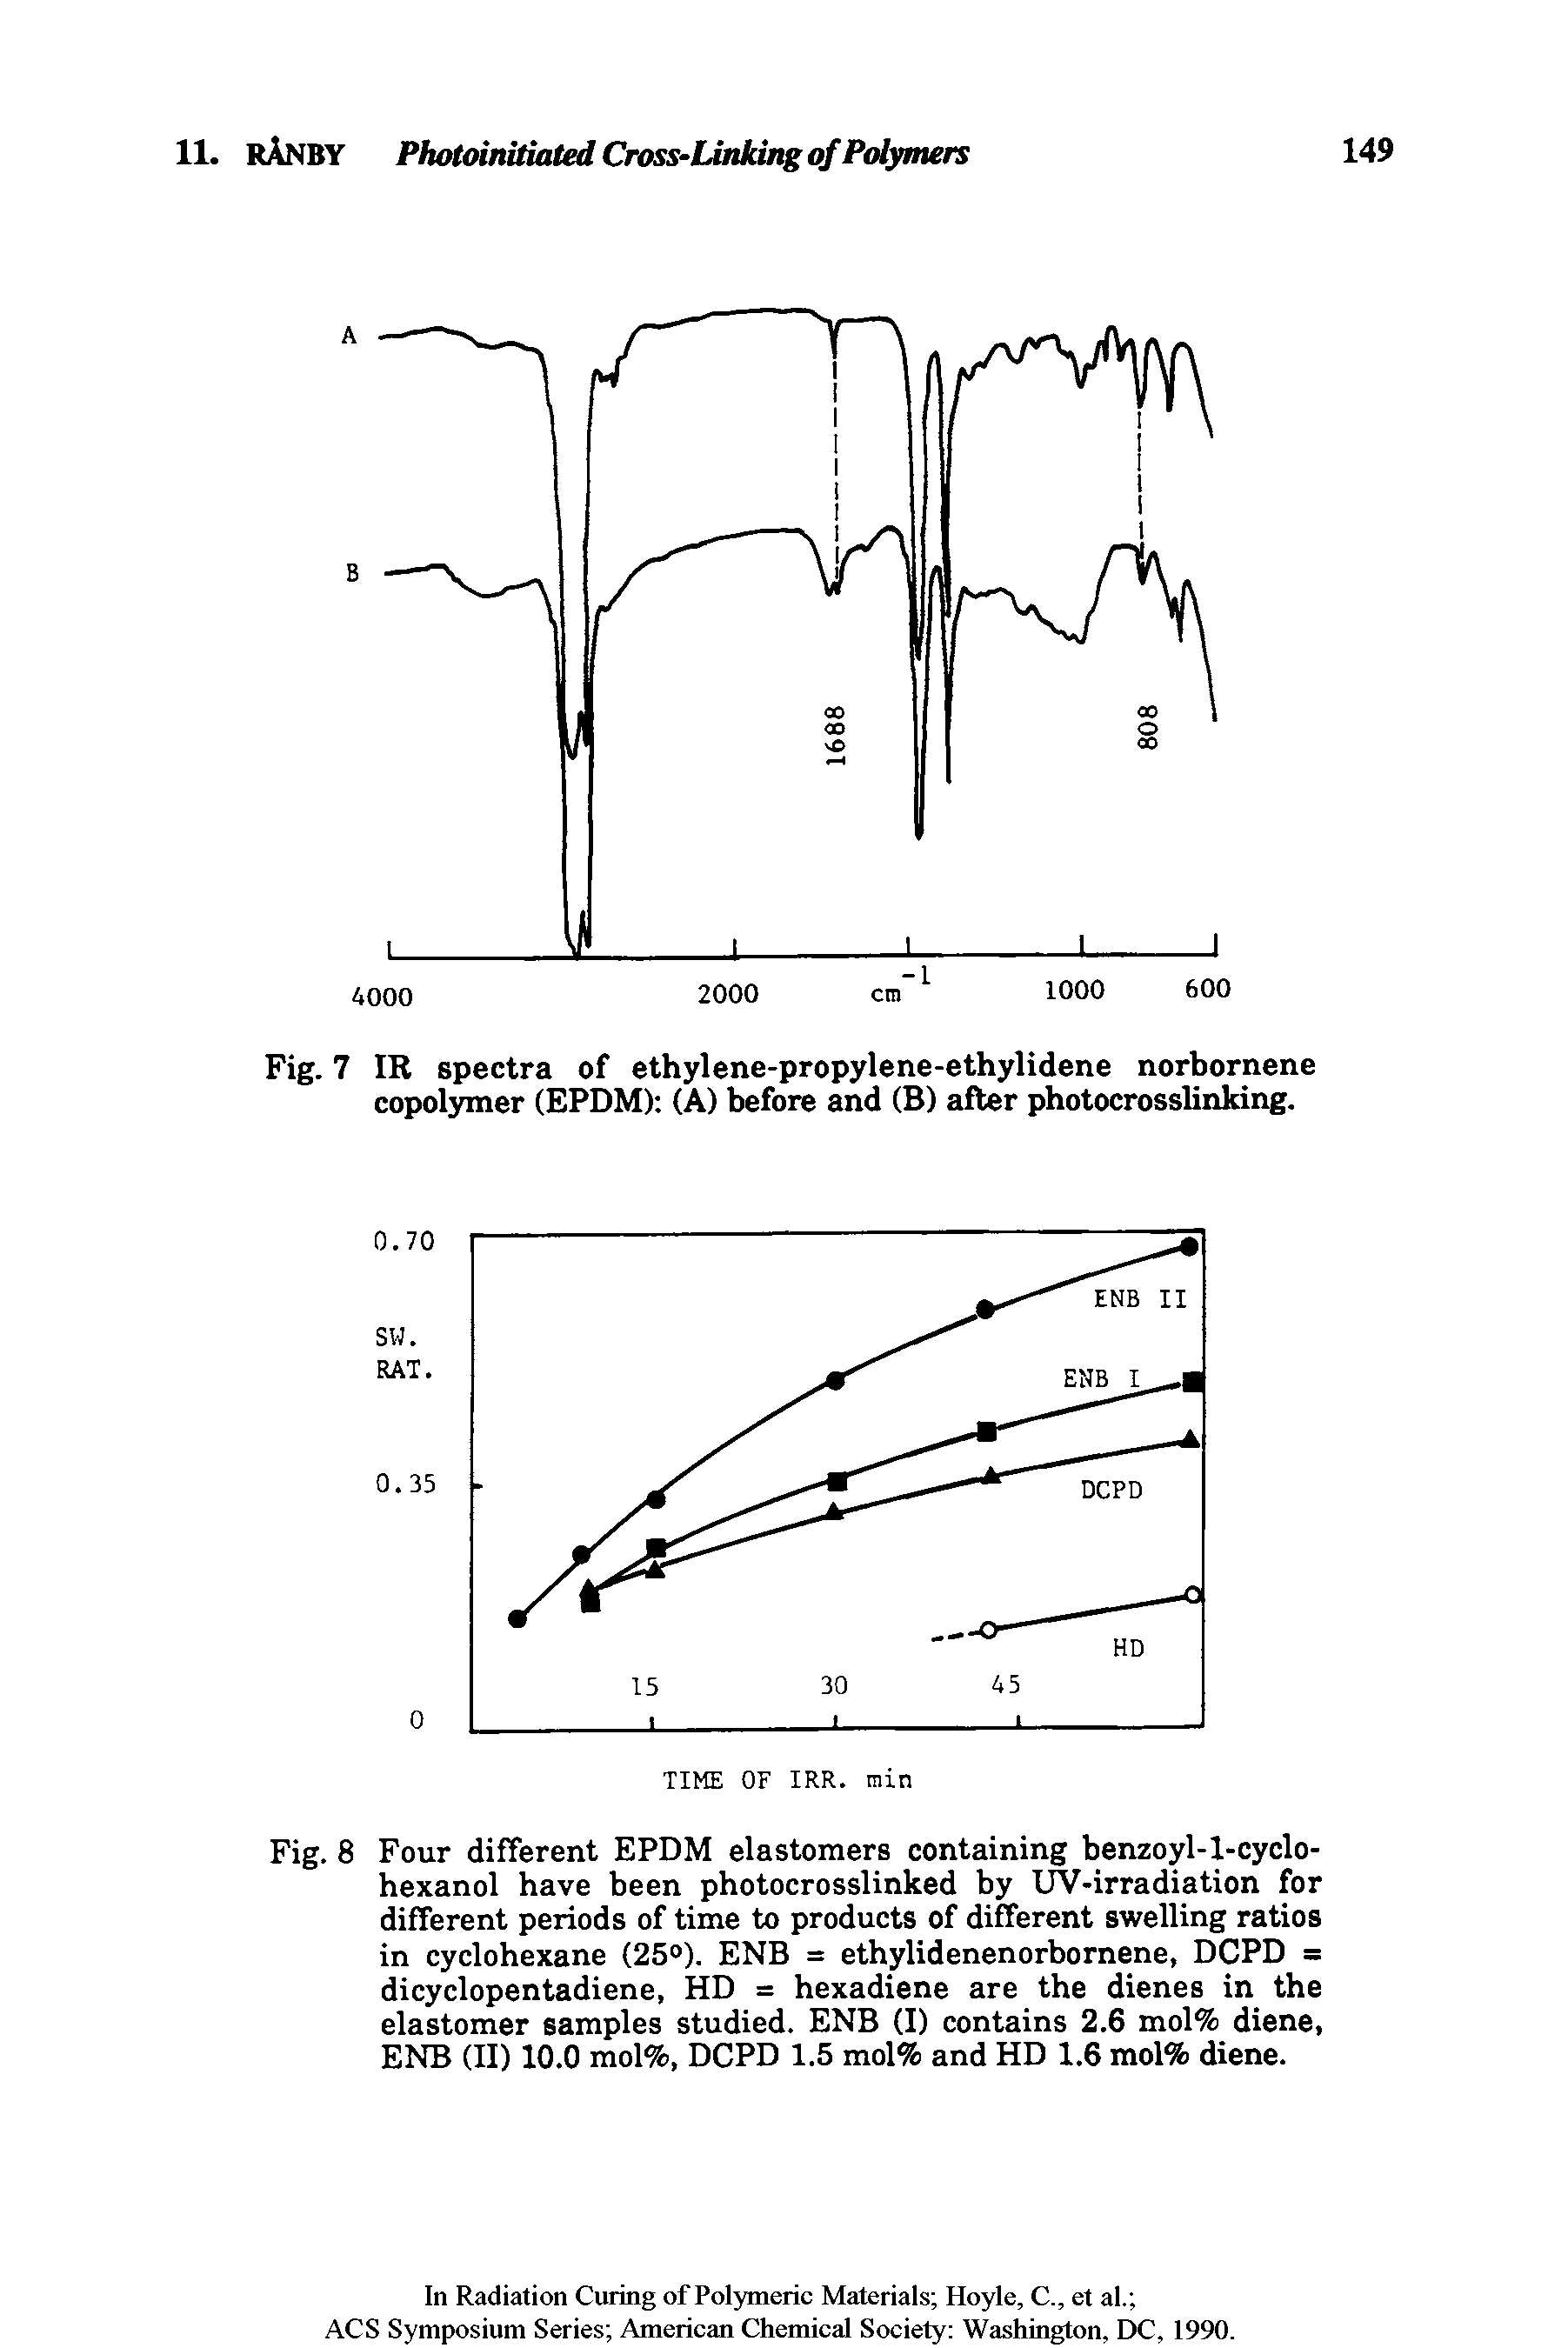 Fig. 7 IR spectra of ethylene-propylene-ethylidene norbornene copolymer (EPDM) (A) before and (B) after photocrossunking.